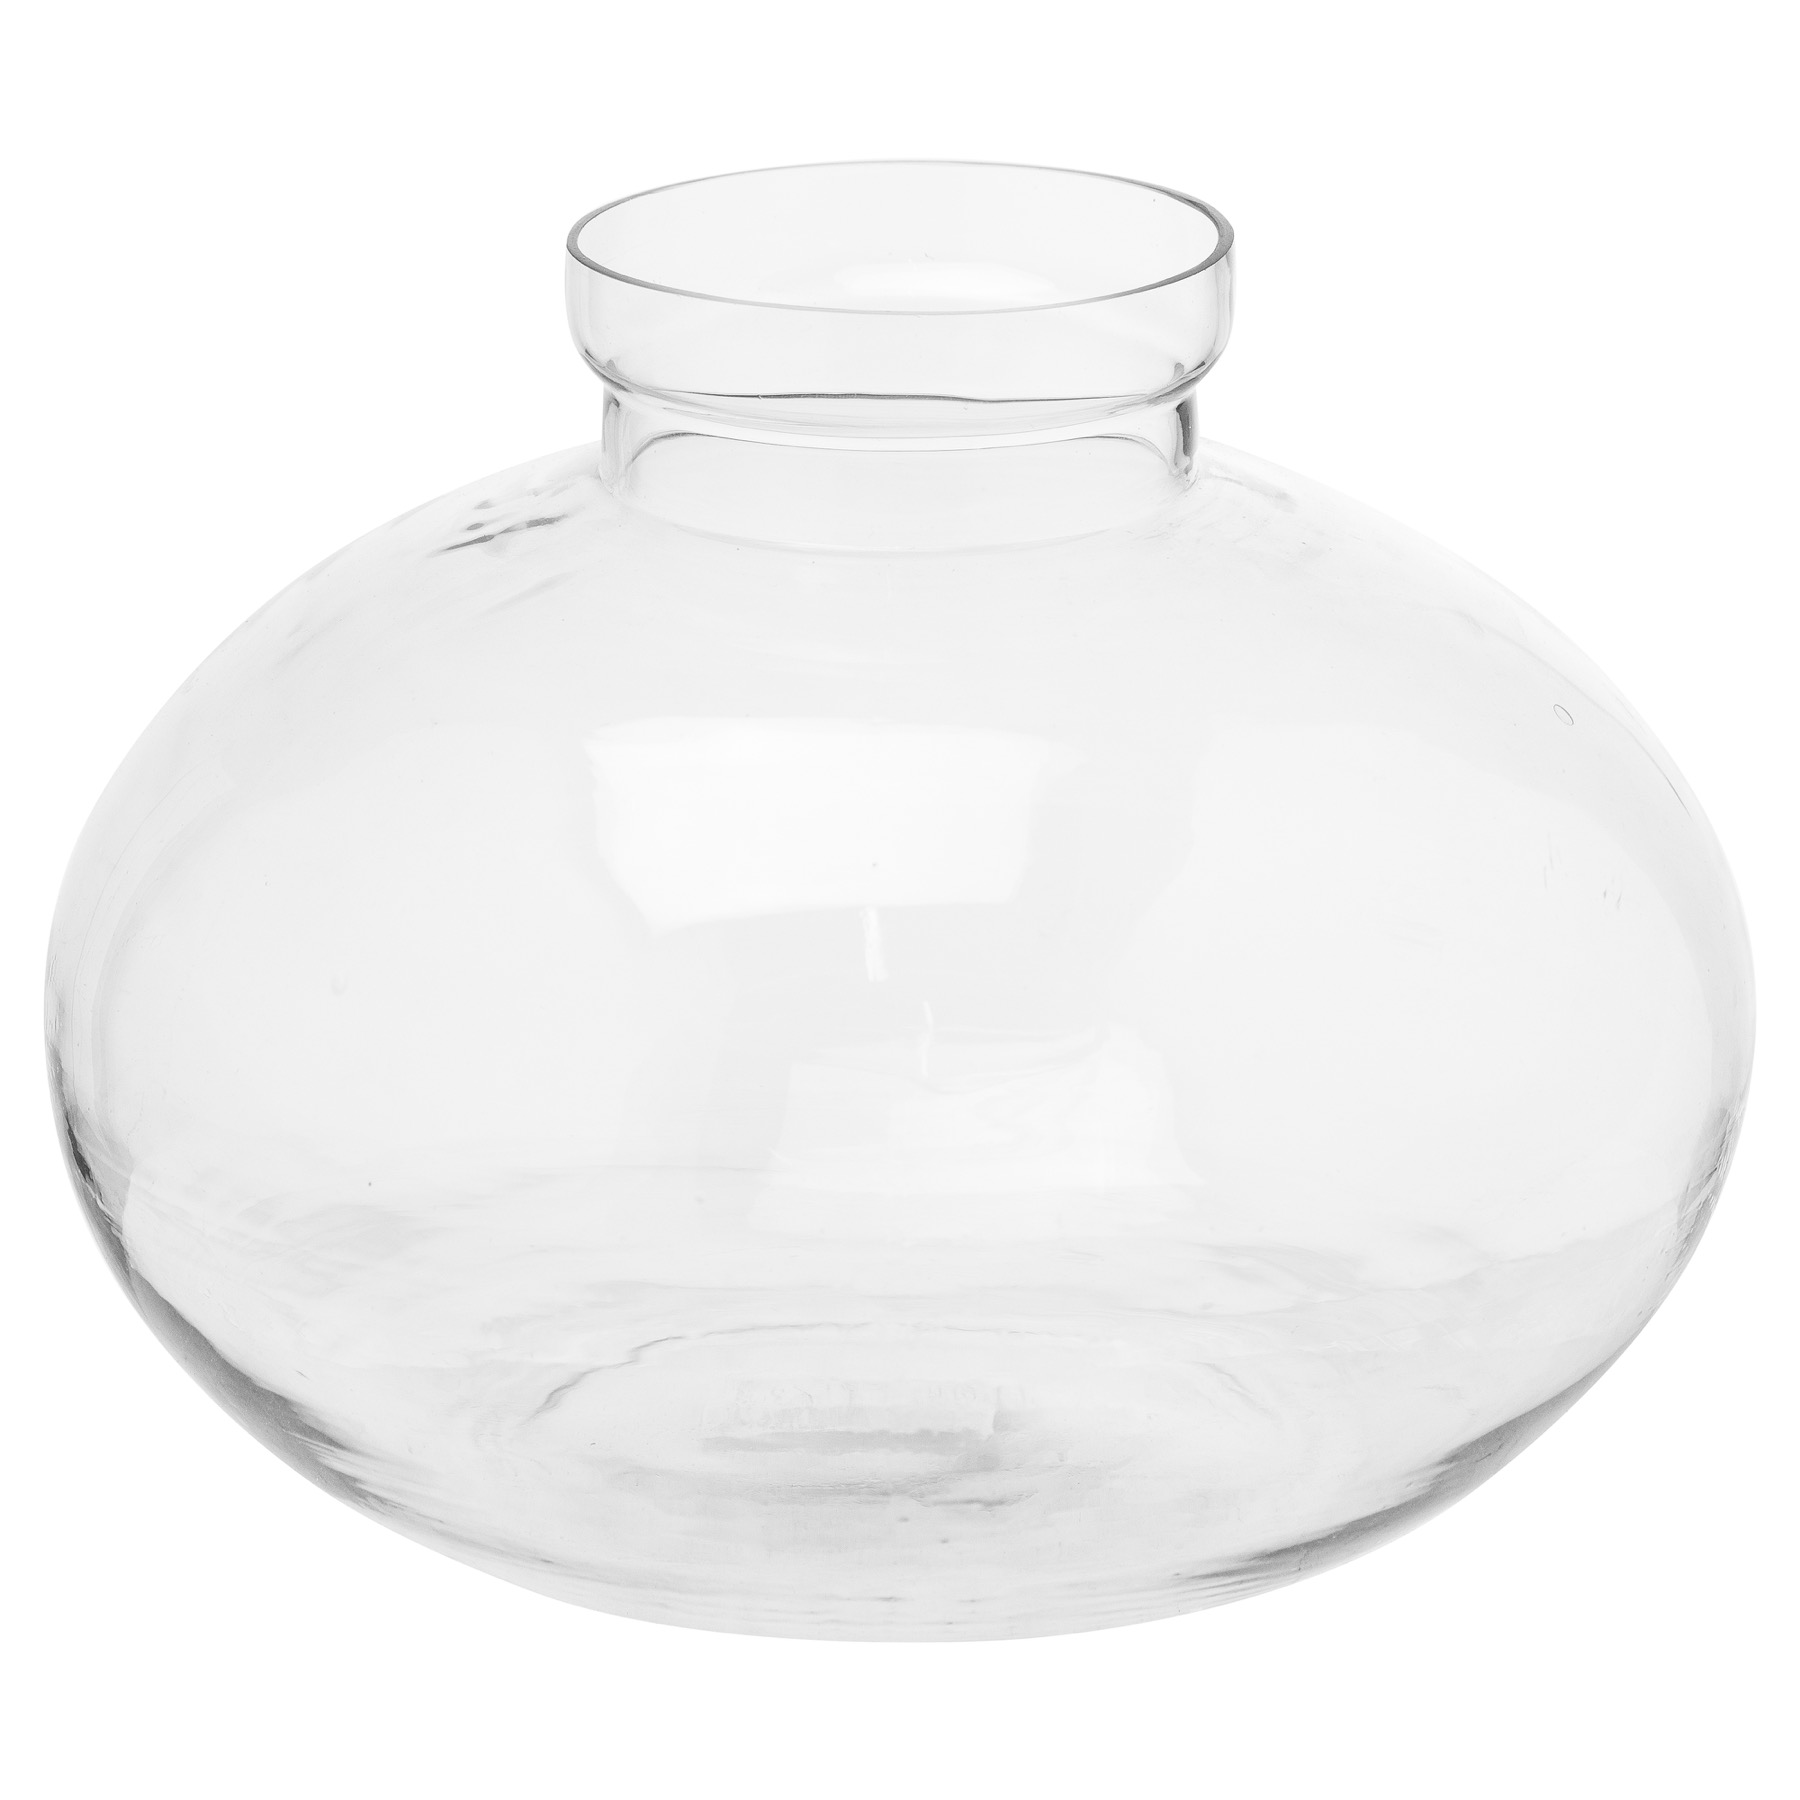 Fish Bowl Glass Vase - Image 1